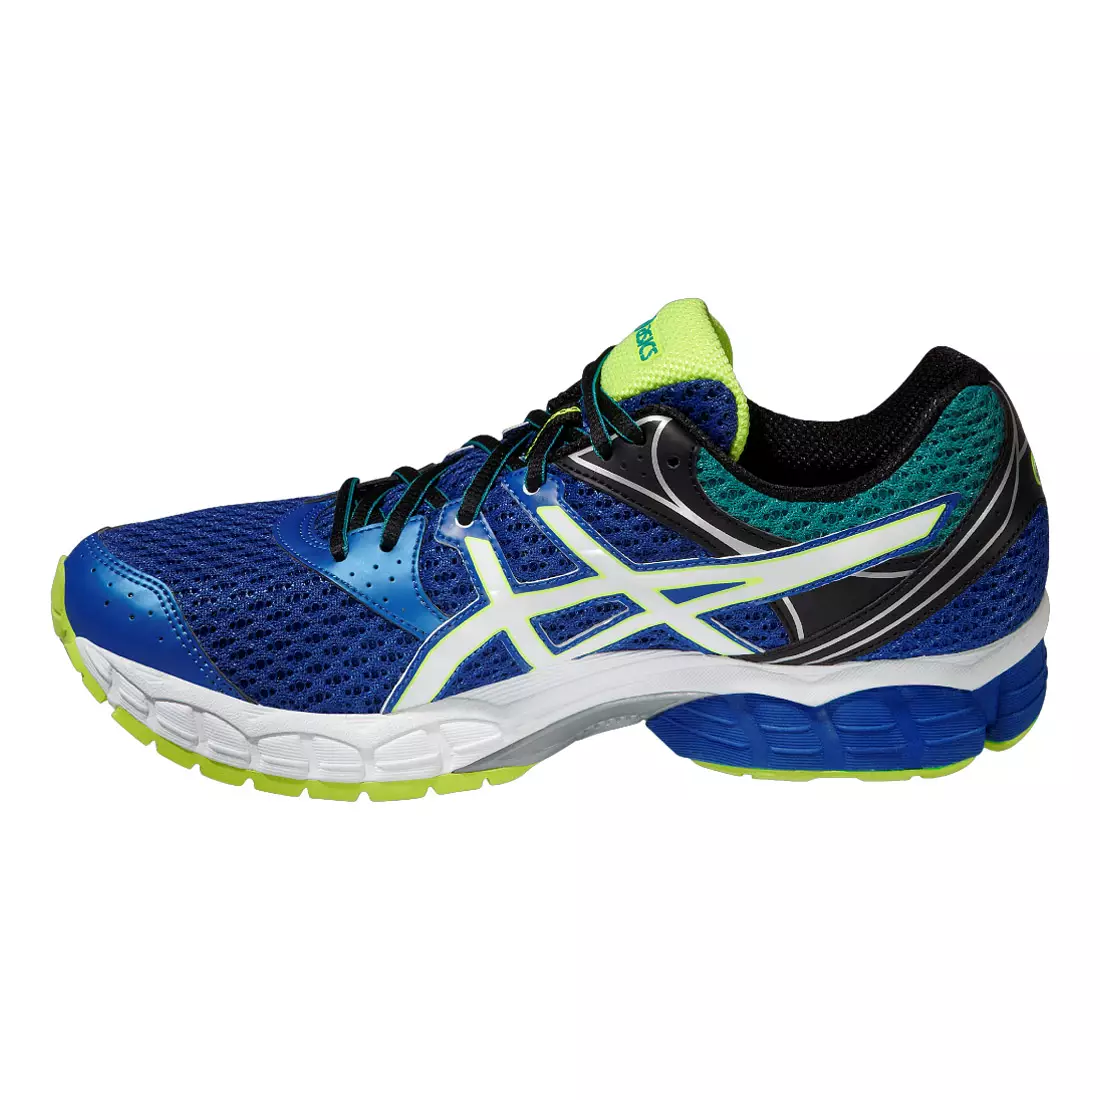 ASICS GEL-PULSE 6 running shoes 4200